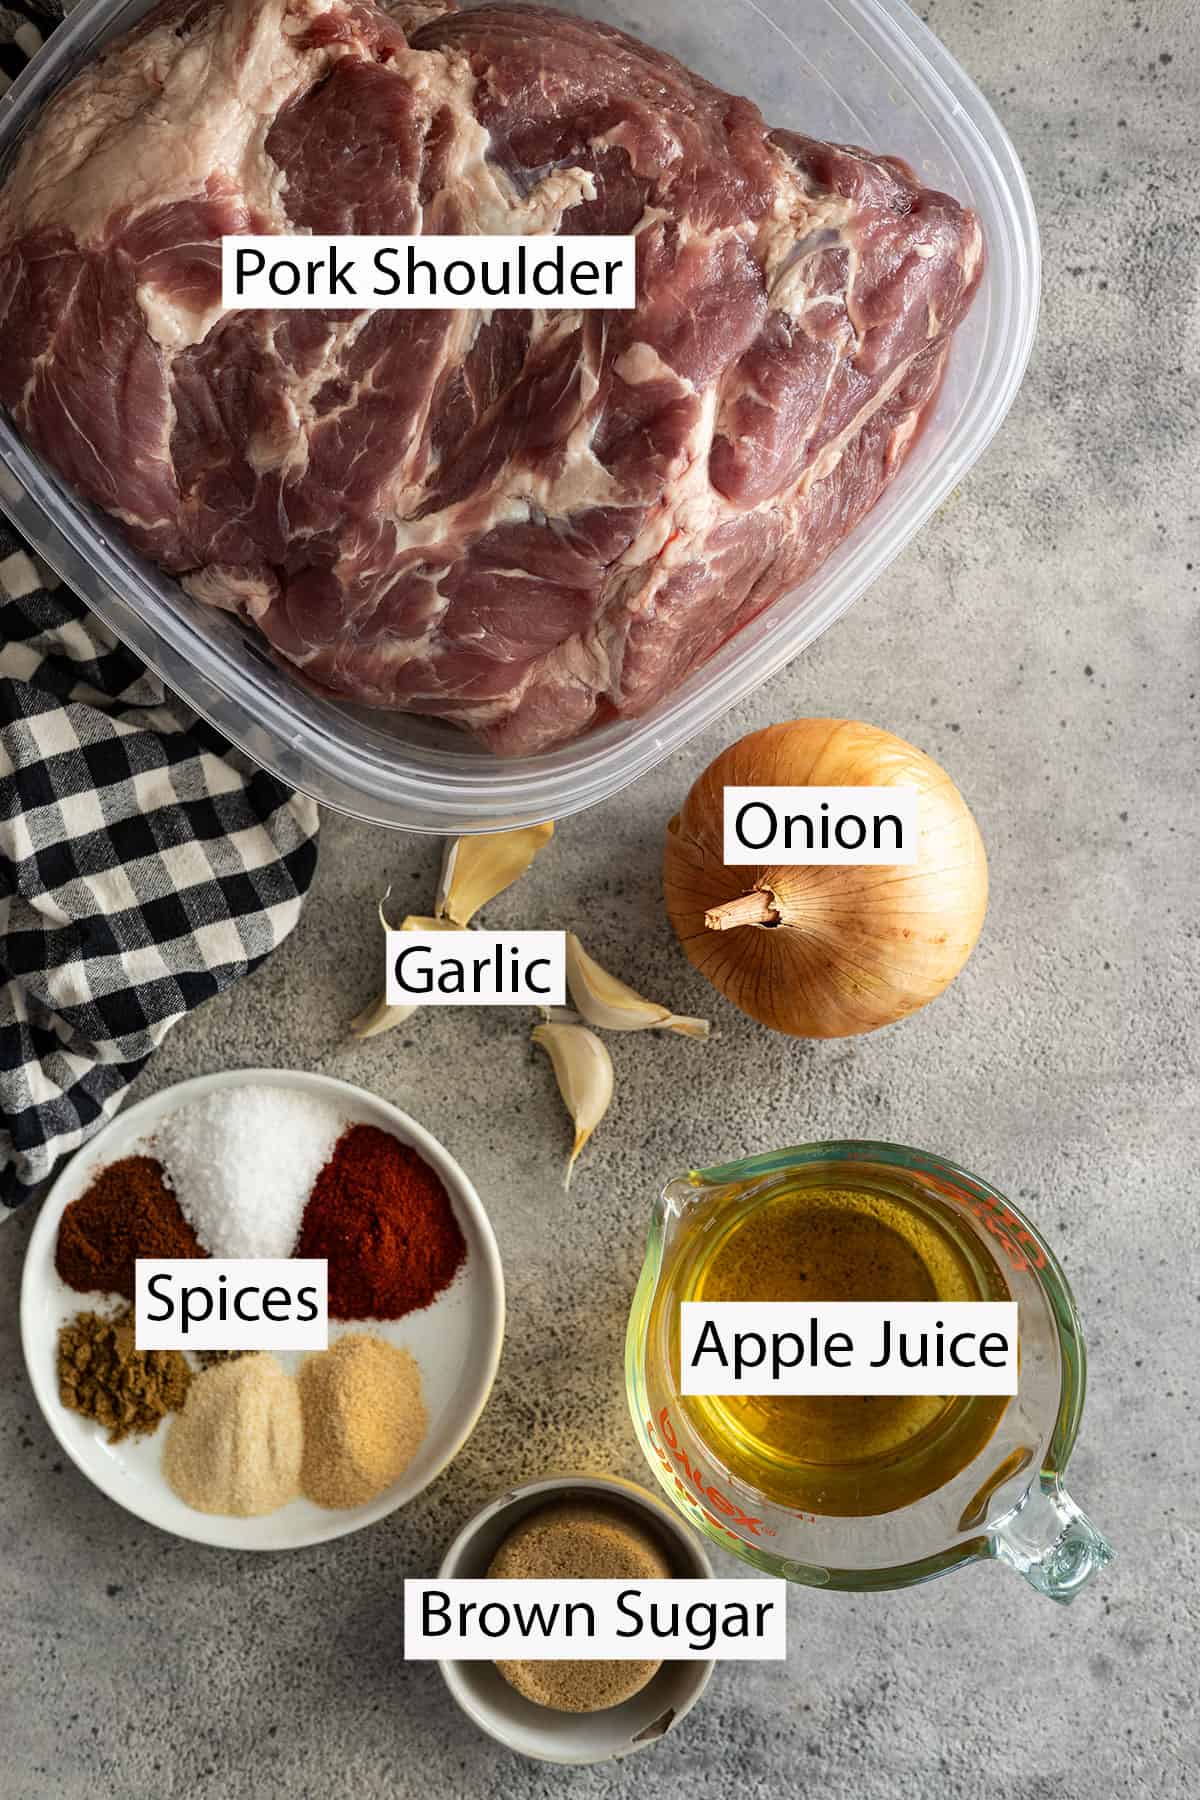 Ingredients: pork shoulder, onion, garlic, apple juice, brown sugar, and spices. 